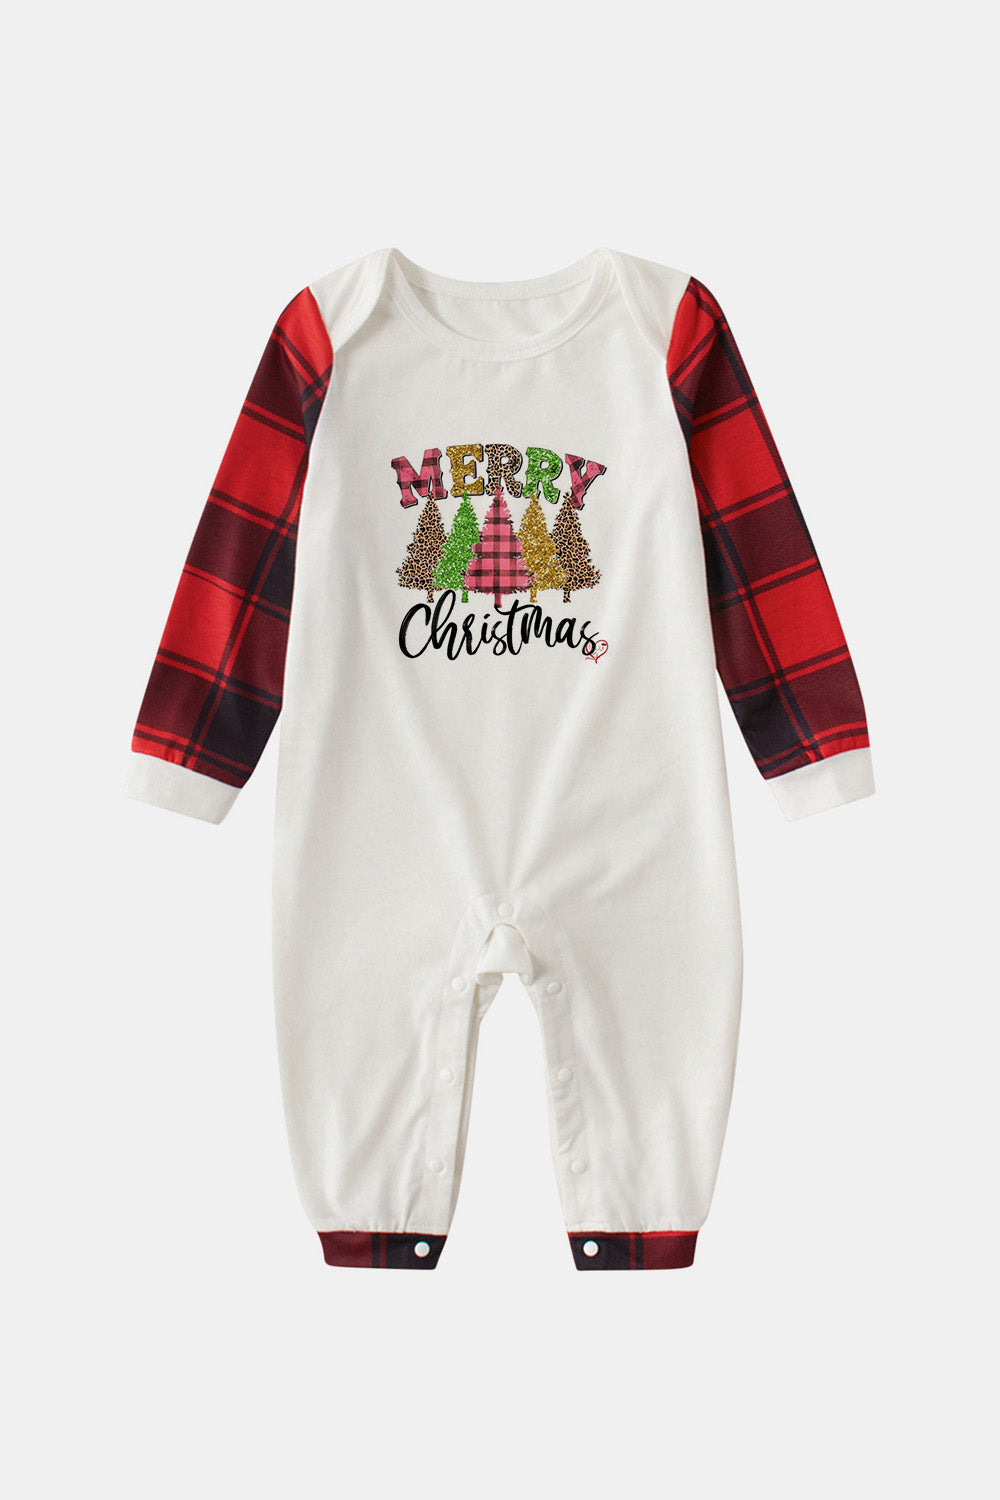 MERRY CHRISTMAS Graphic Plaid Sleeve Jumpsuit